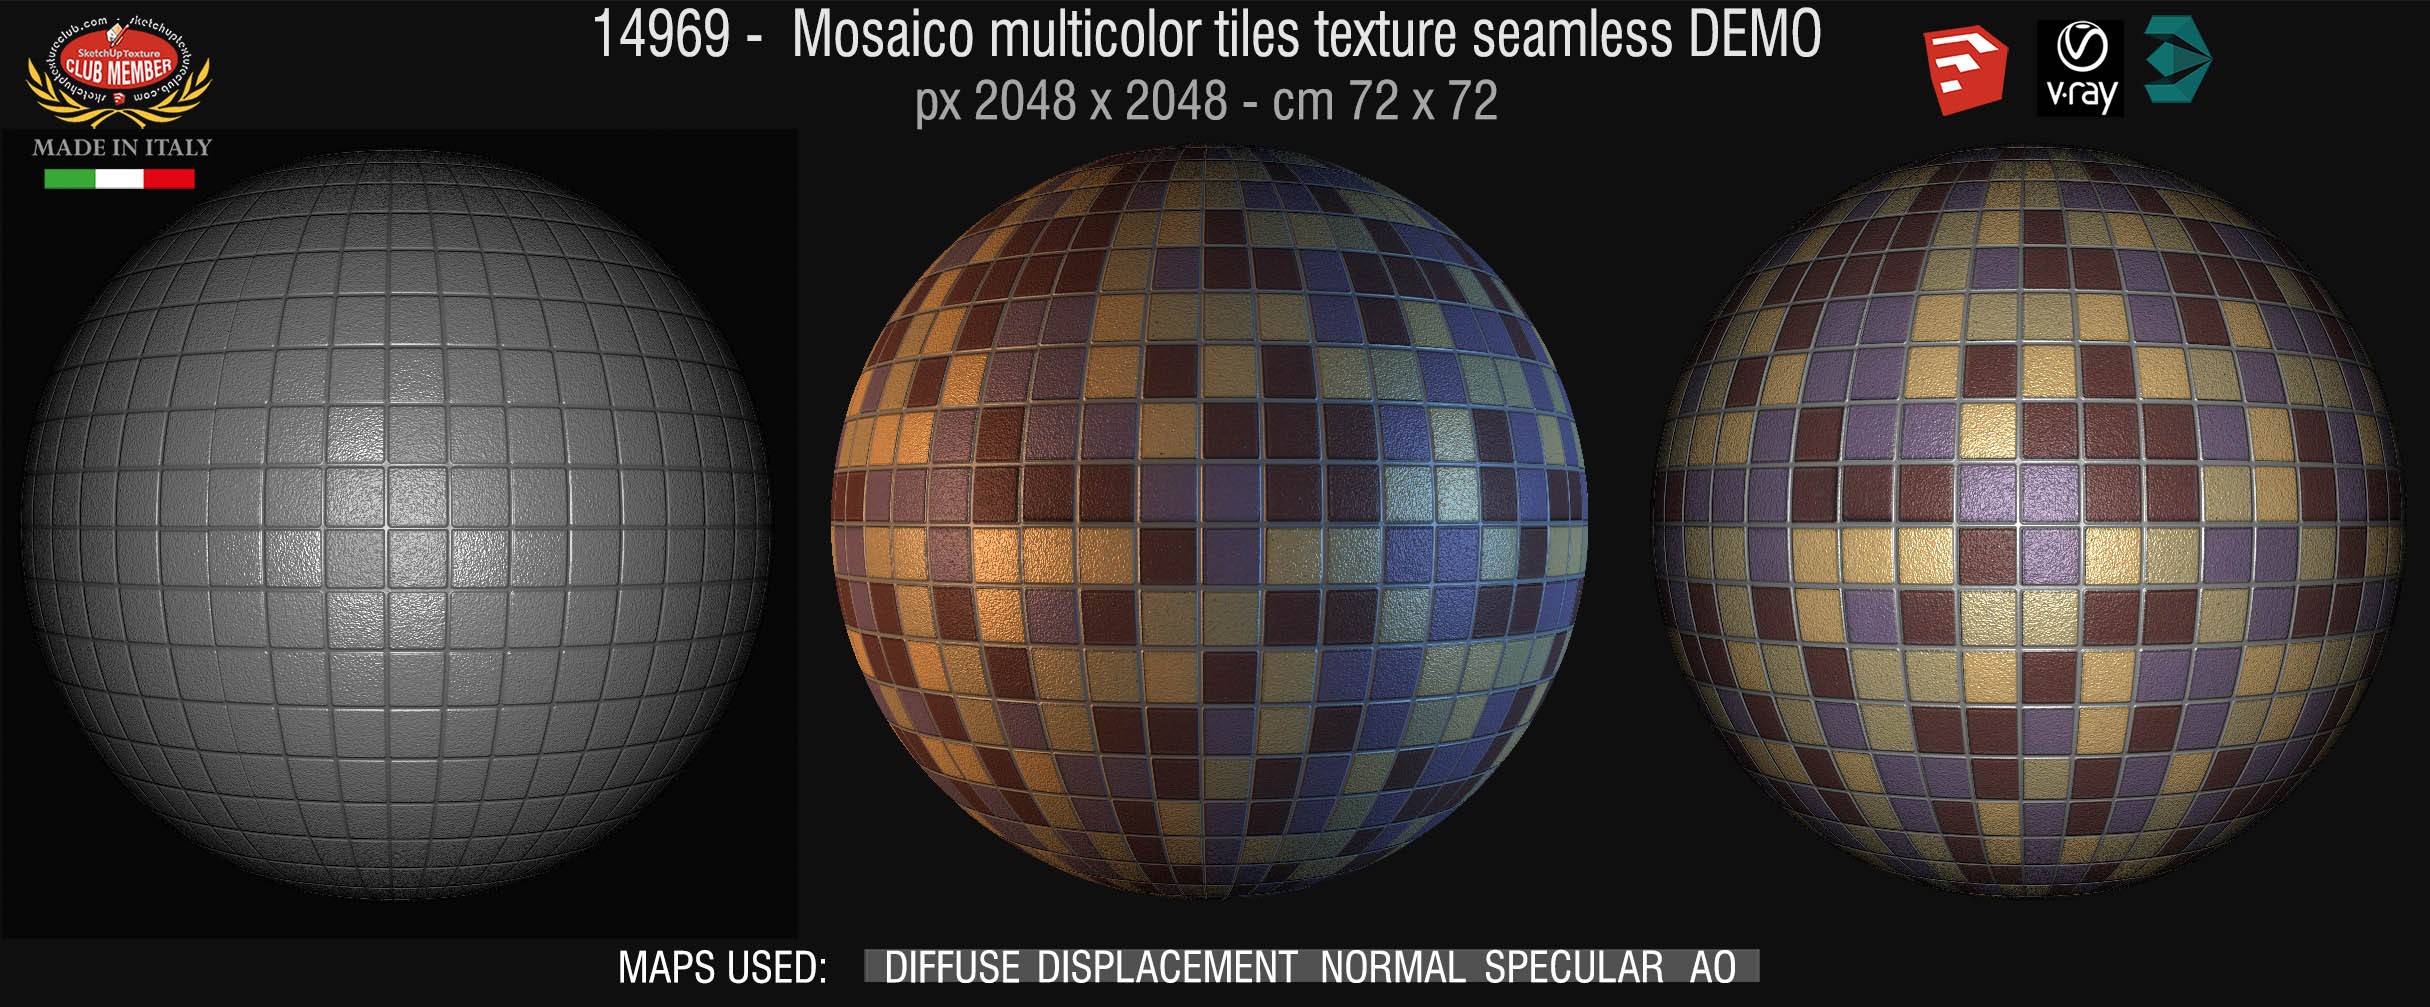 14969 Mosaico multicolor tiles texture seamless + maps DEMO